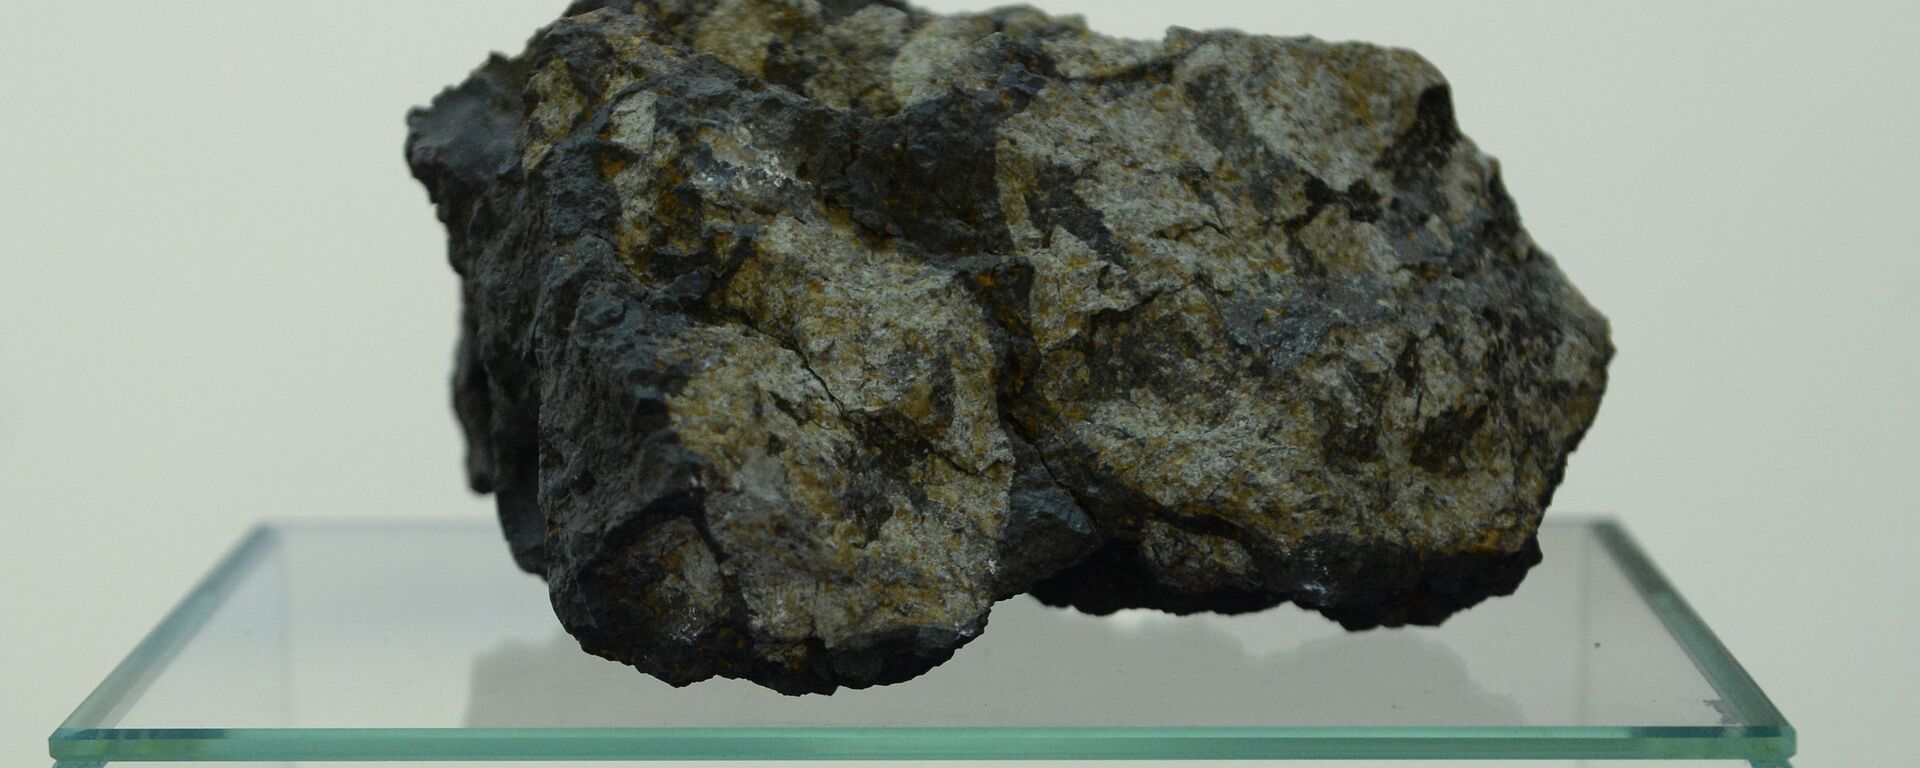 Un trozo del meteorito de Cheliábinsk - Sputnik Mundo, 1920, 03.02.2019